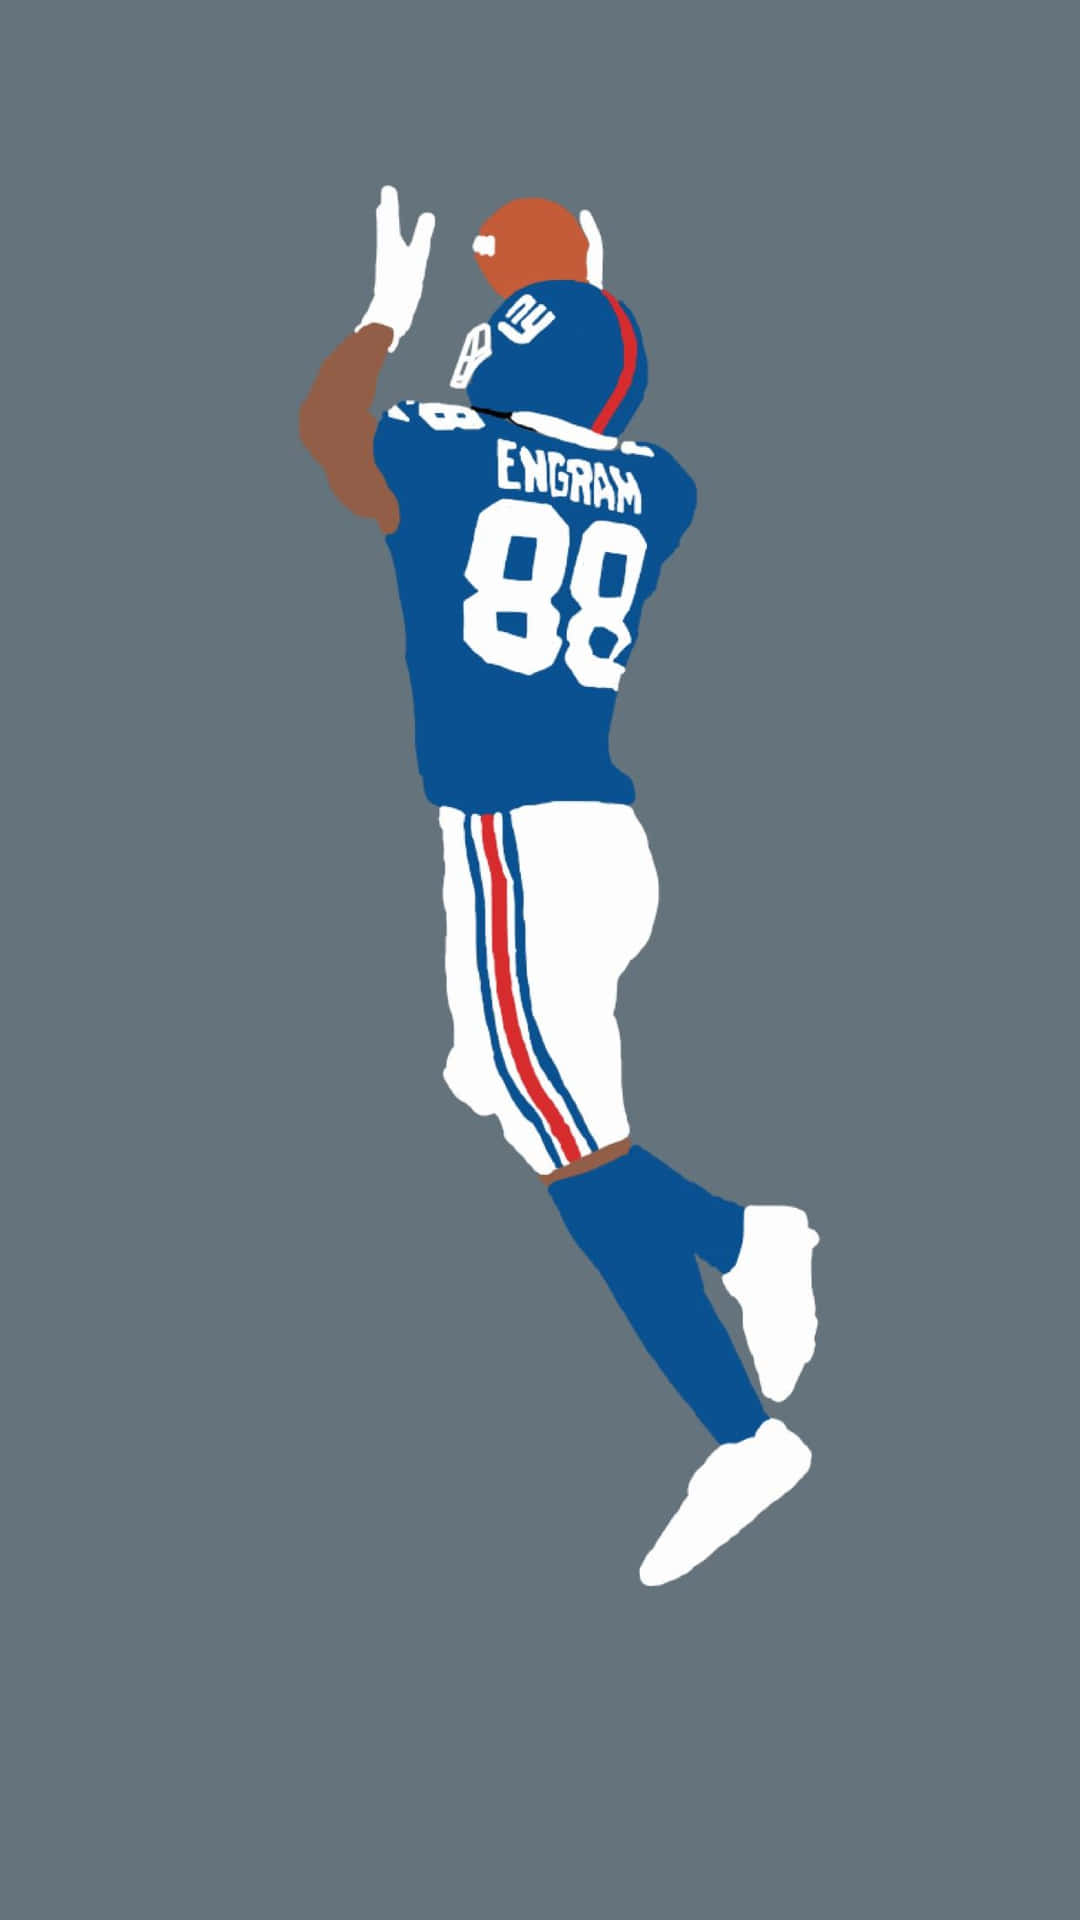 Evan Engram Catching Football Illustration Wallpaper